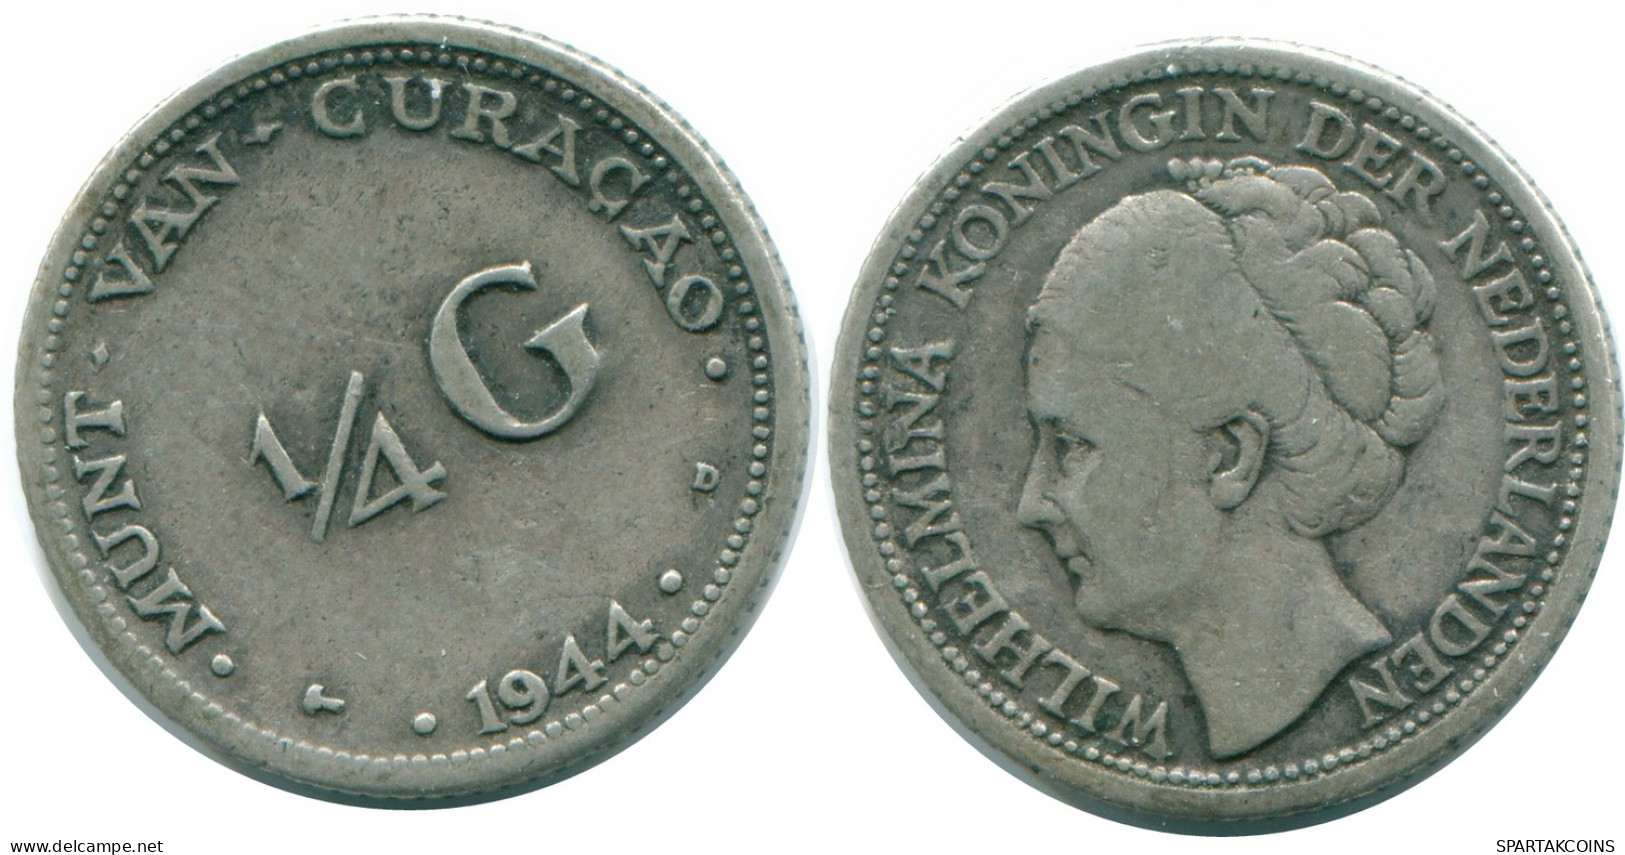 1/4 GULDEN 1944 CURACAO Netherlands SILVER Colonial Coin #NL10679.4.U - Curaçao